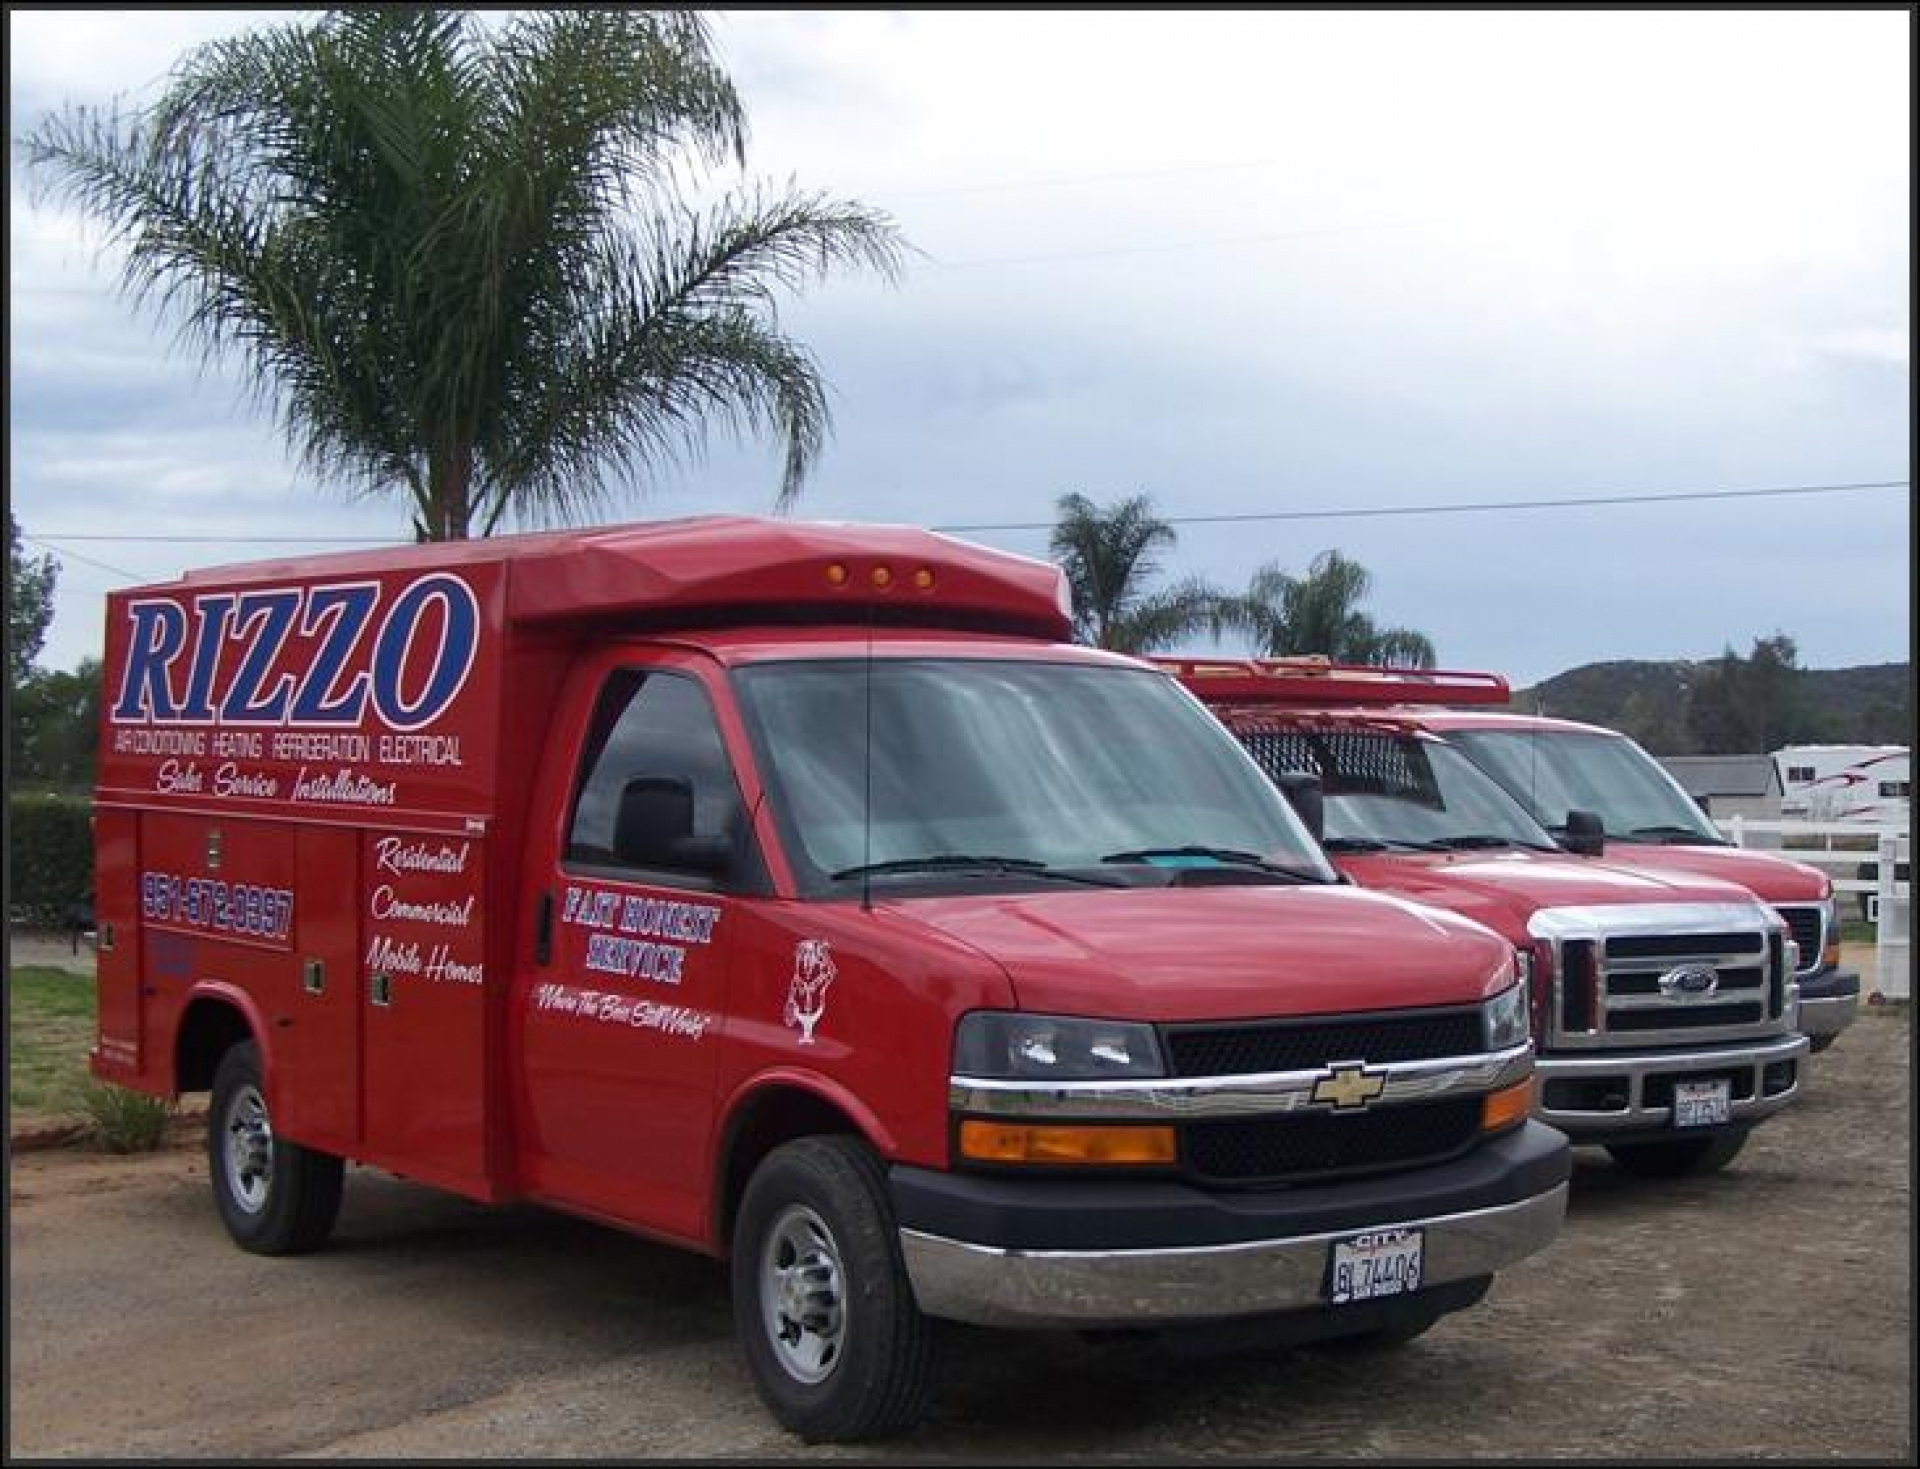 Rizzo HVAC van and logo